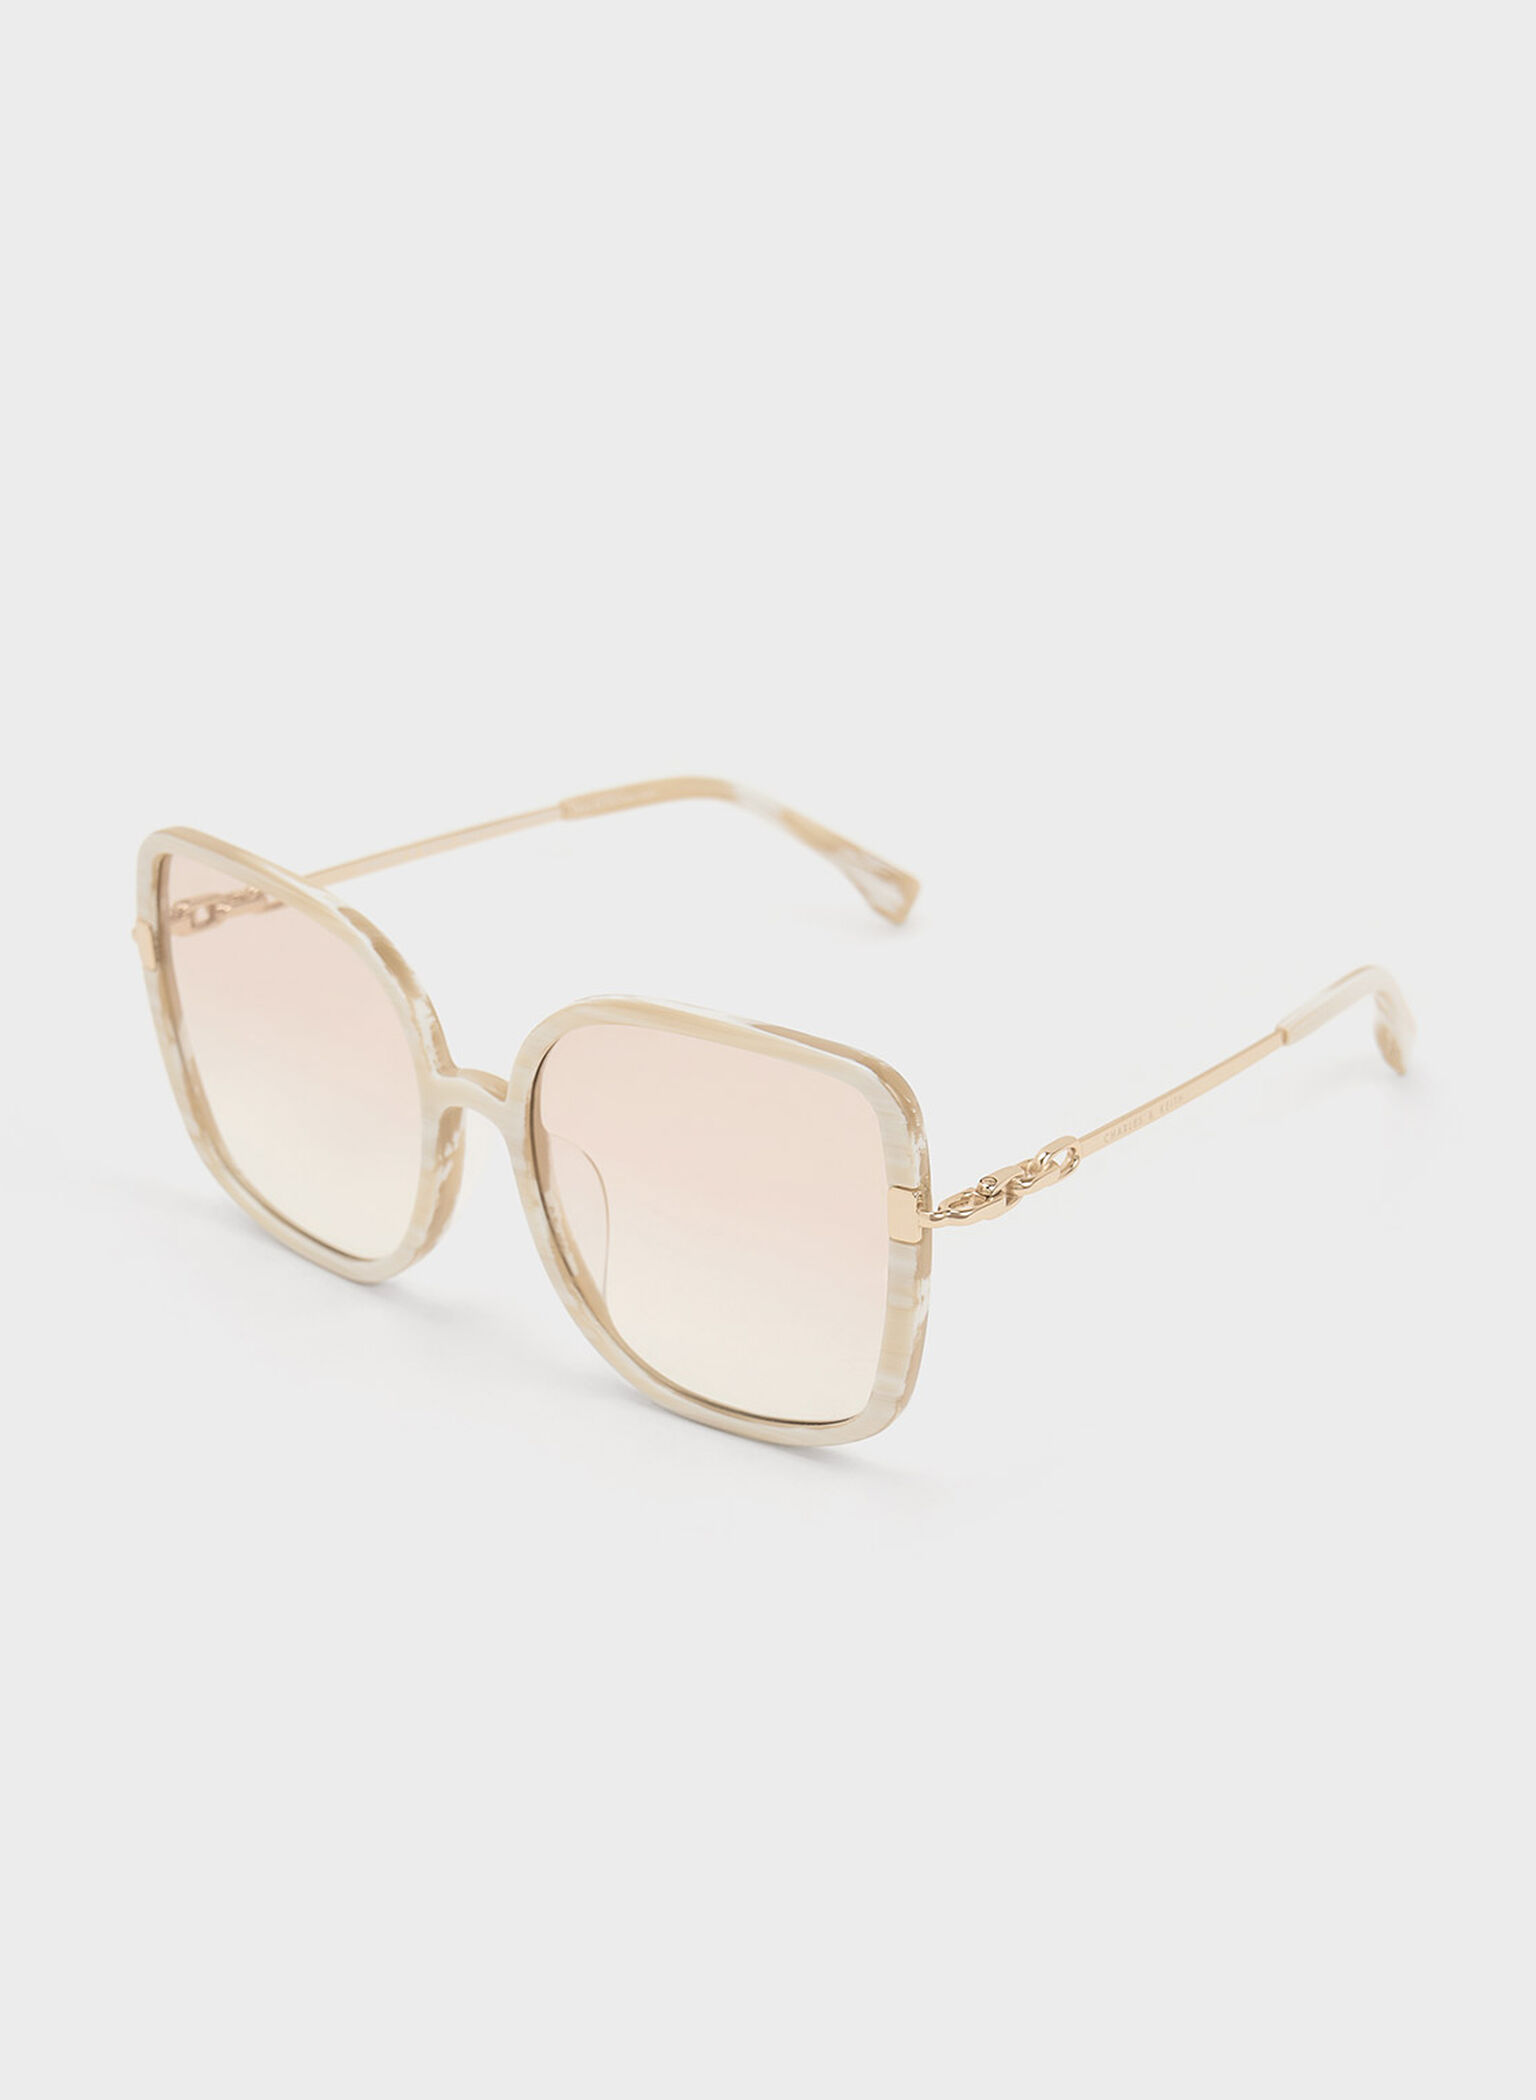 Oversized Square Chain-Link Sunglasses, Cream, hi-res